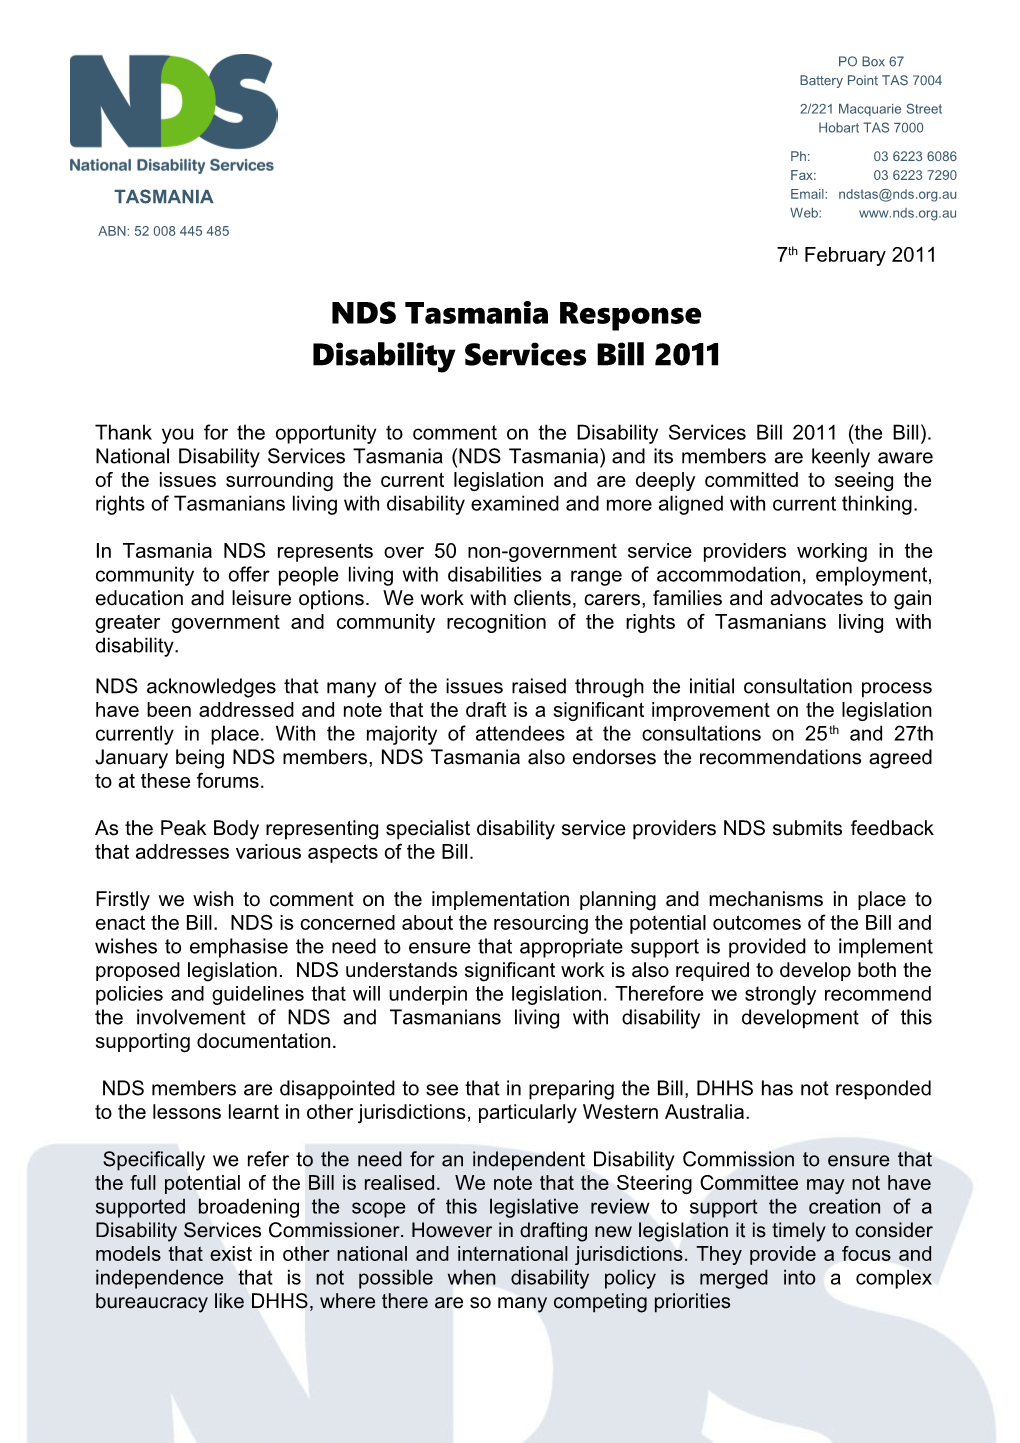 NDS Tasmania Response